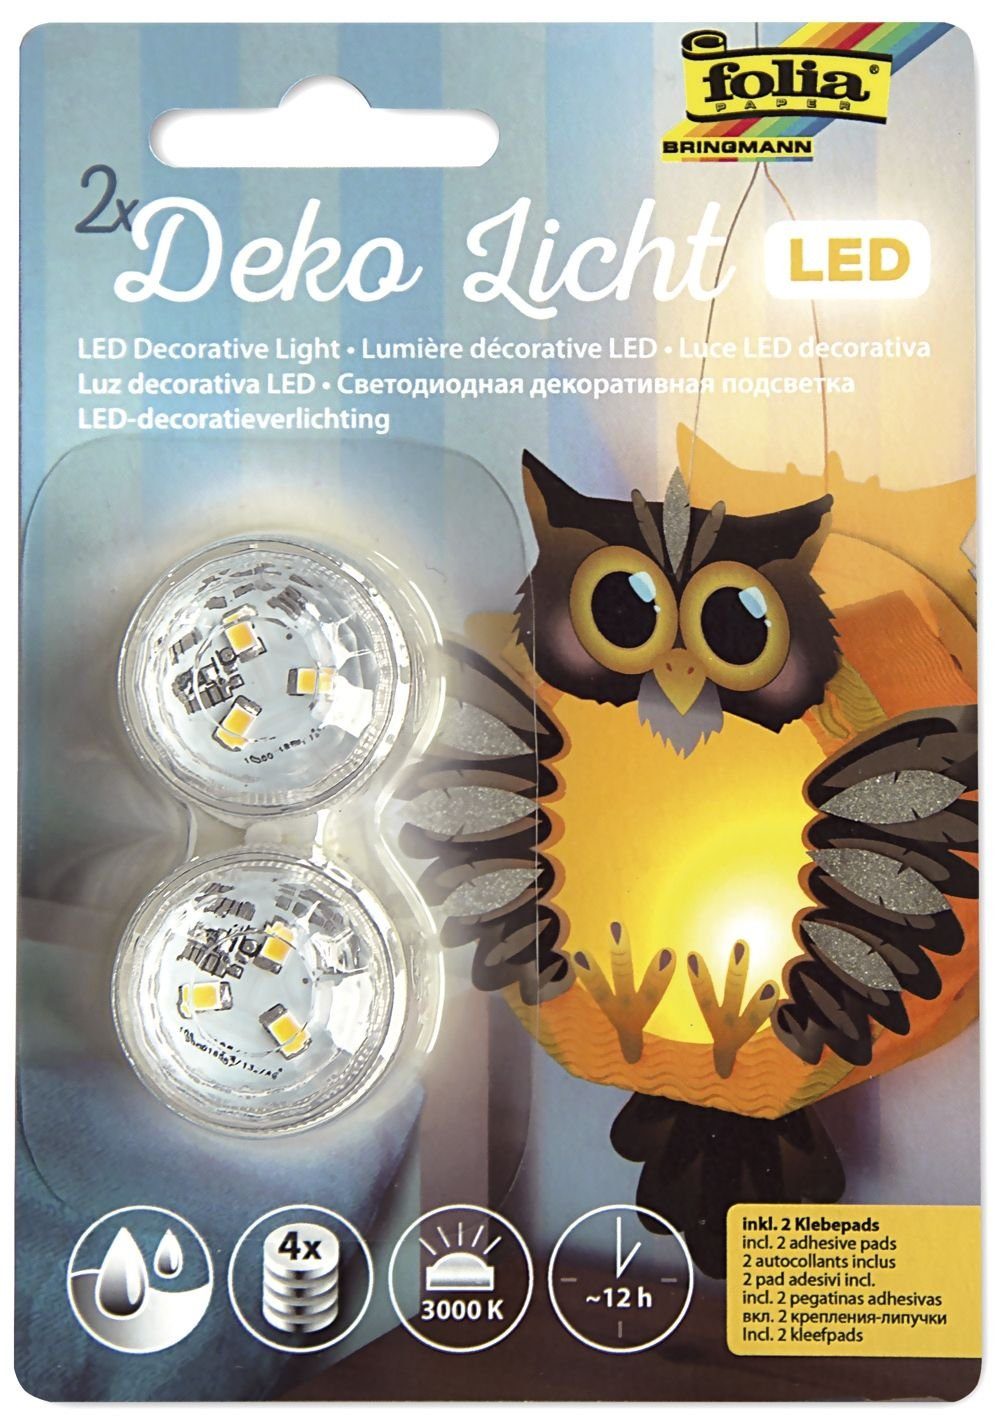 Folia Klemmen folia LED-Deko-Licht, inkl. Batterien